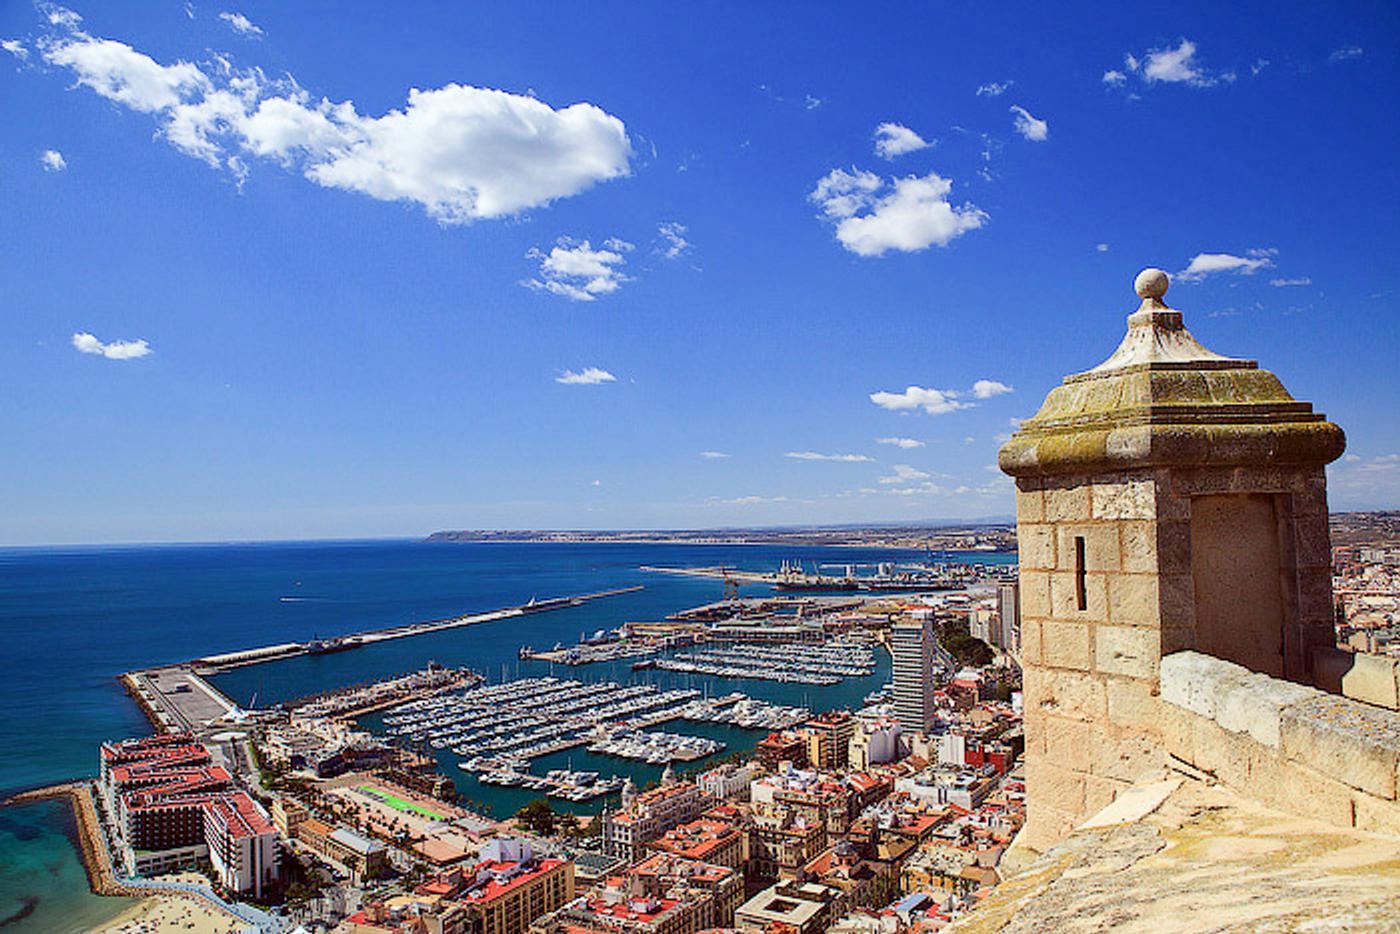 Alicante: A jewel in the Mediterranean